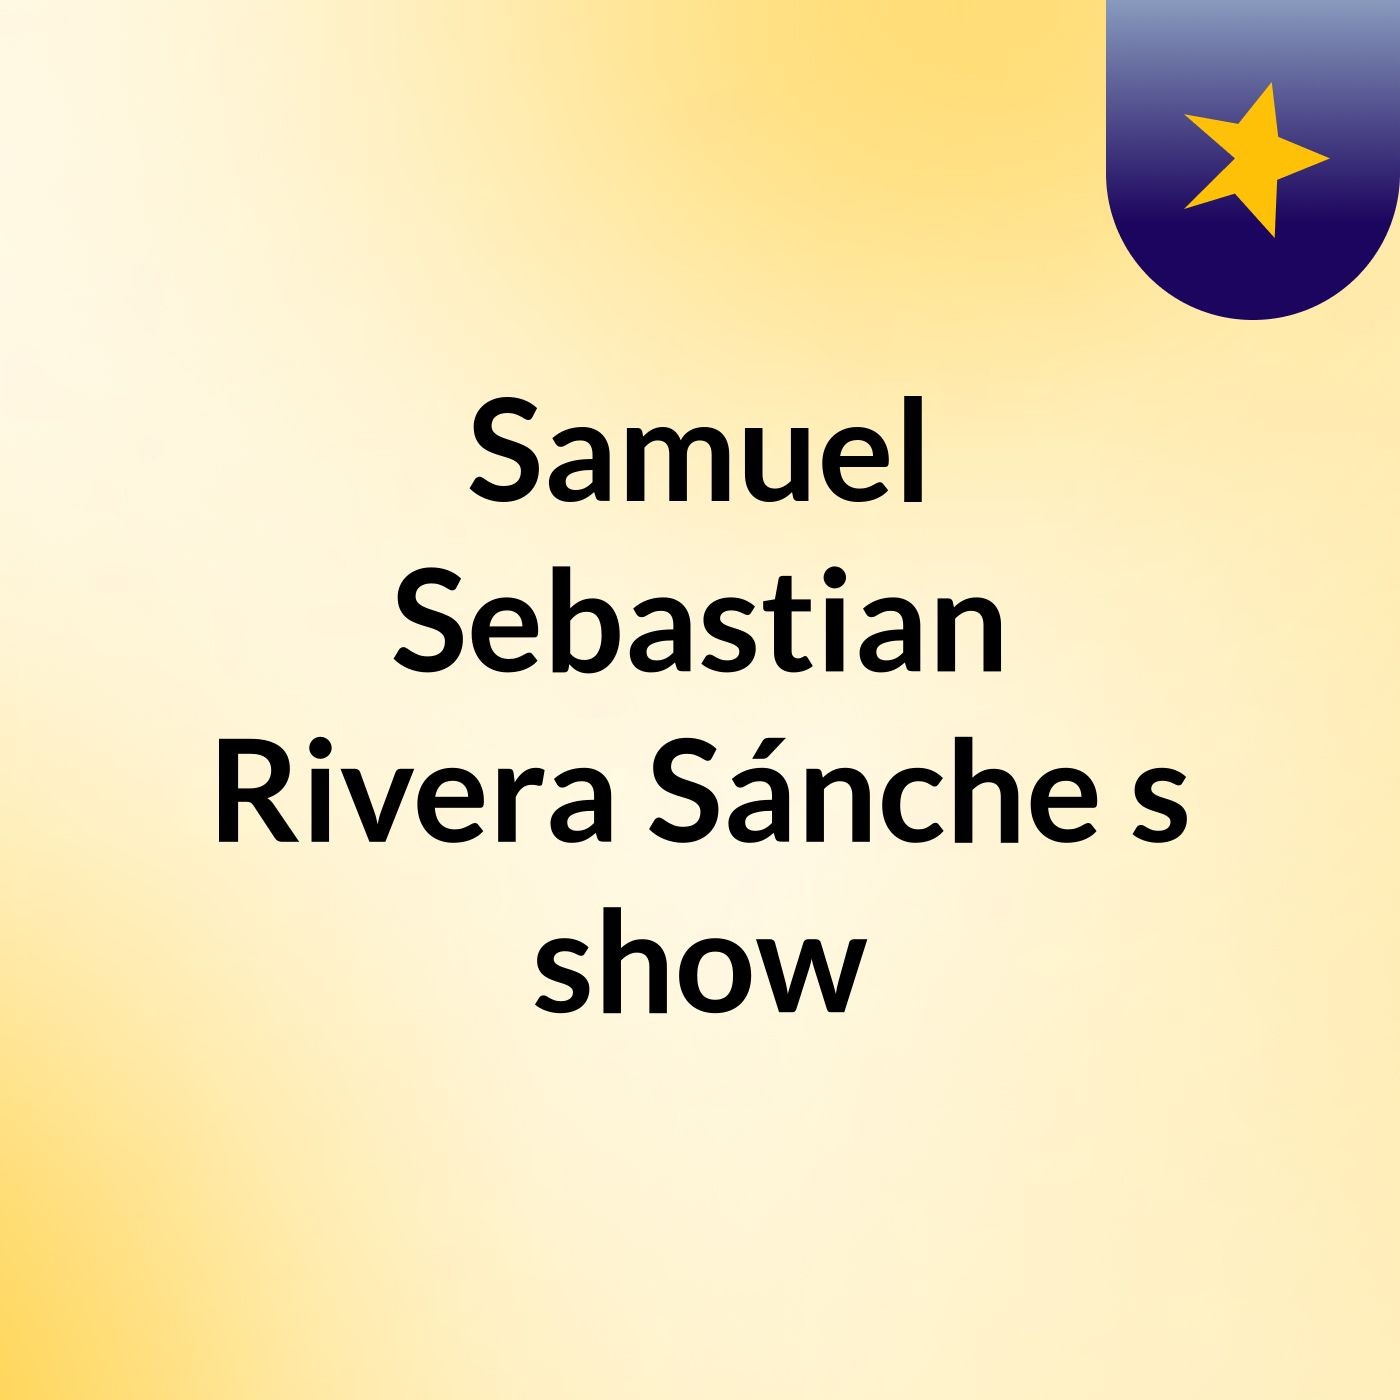 Samuel Sebastian Rivera Sánche's show